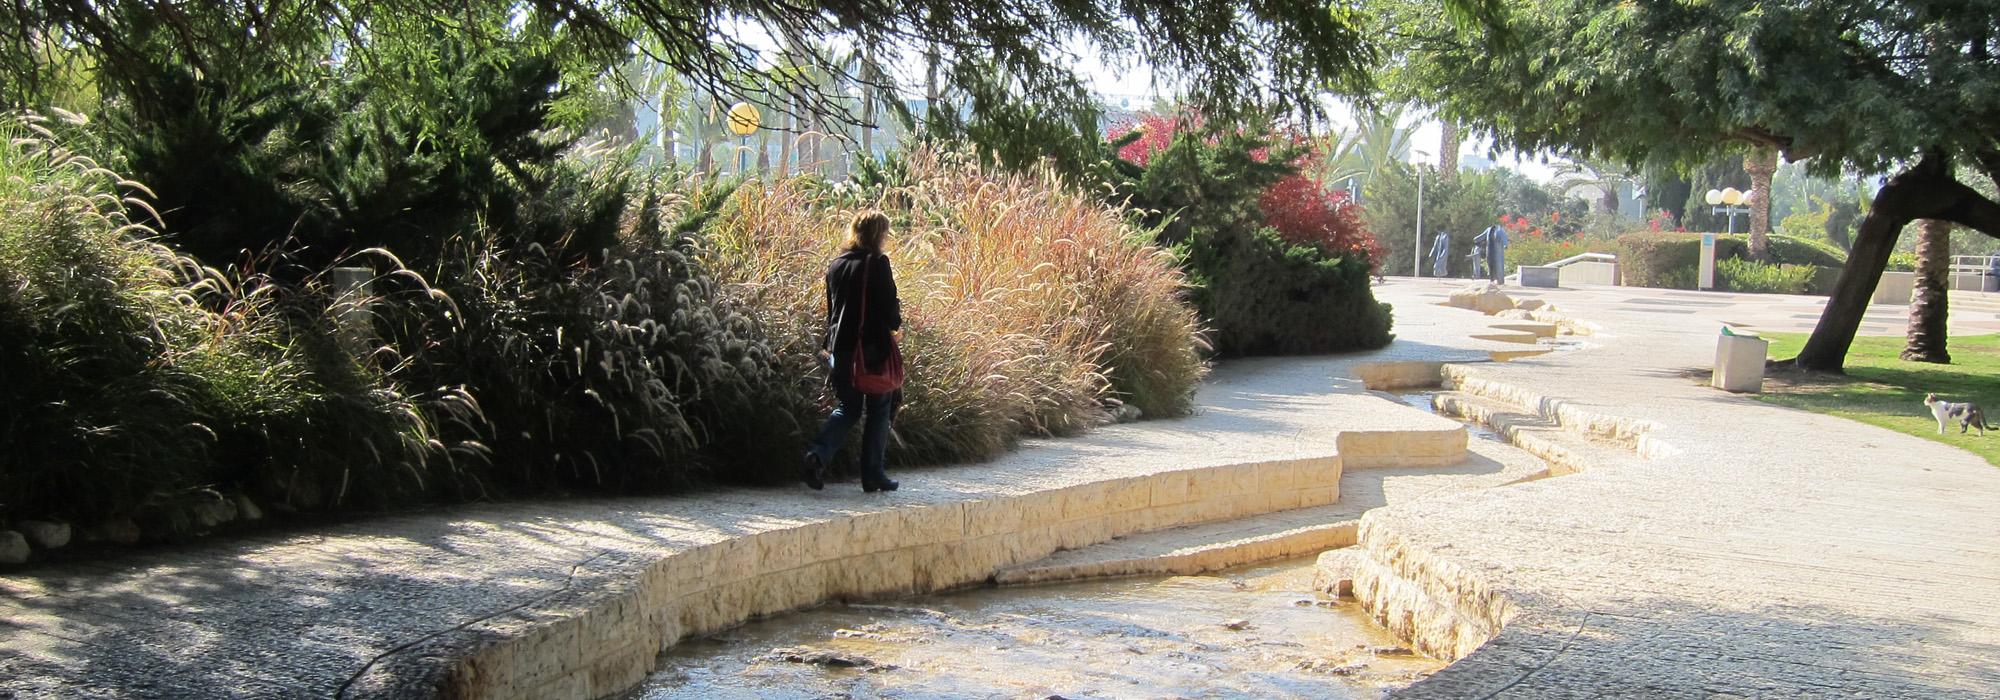 Kreitman Plaza in Israel - Photo by Charles Birnbaum, 2011